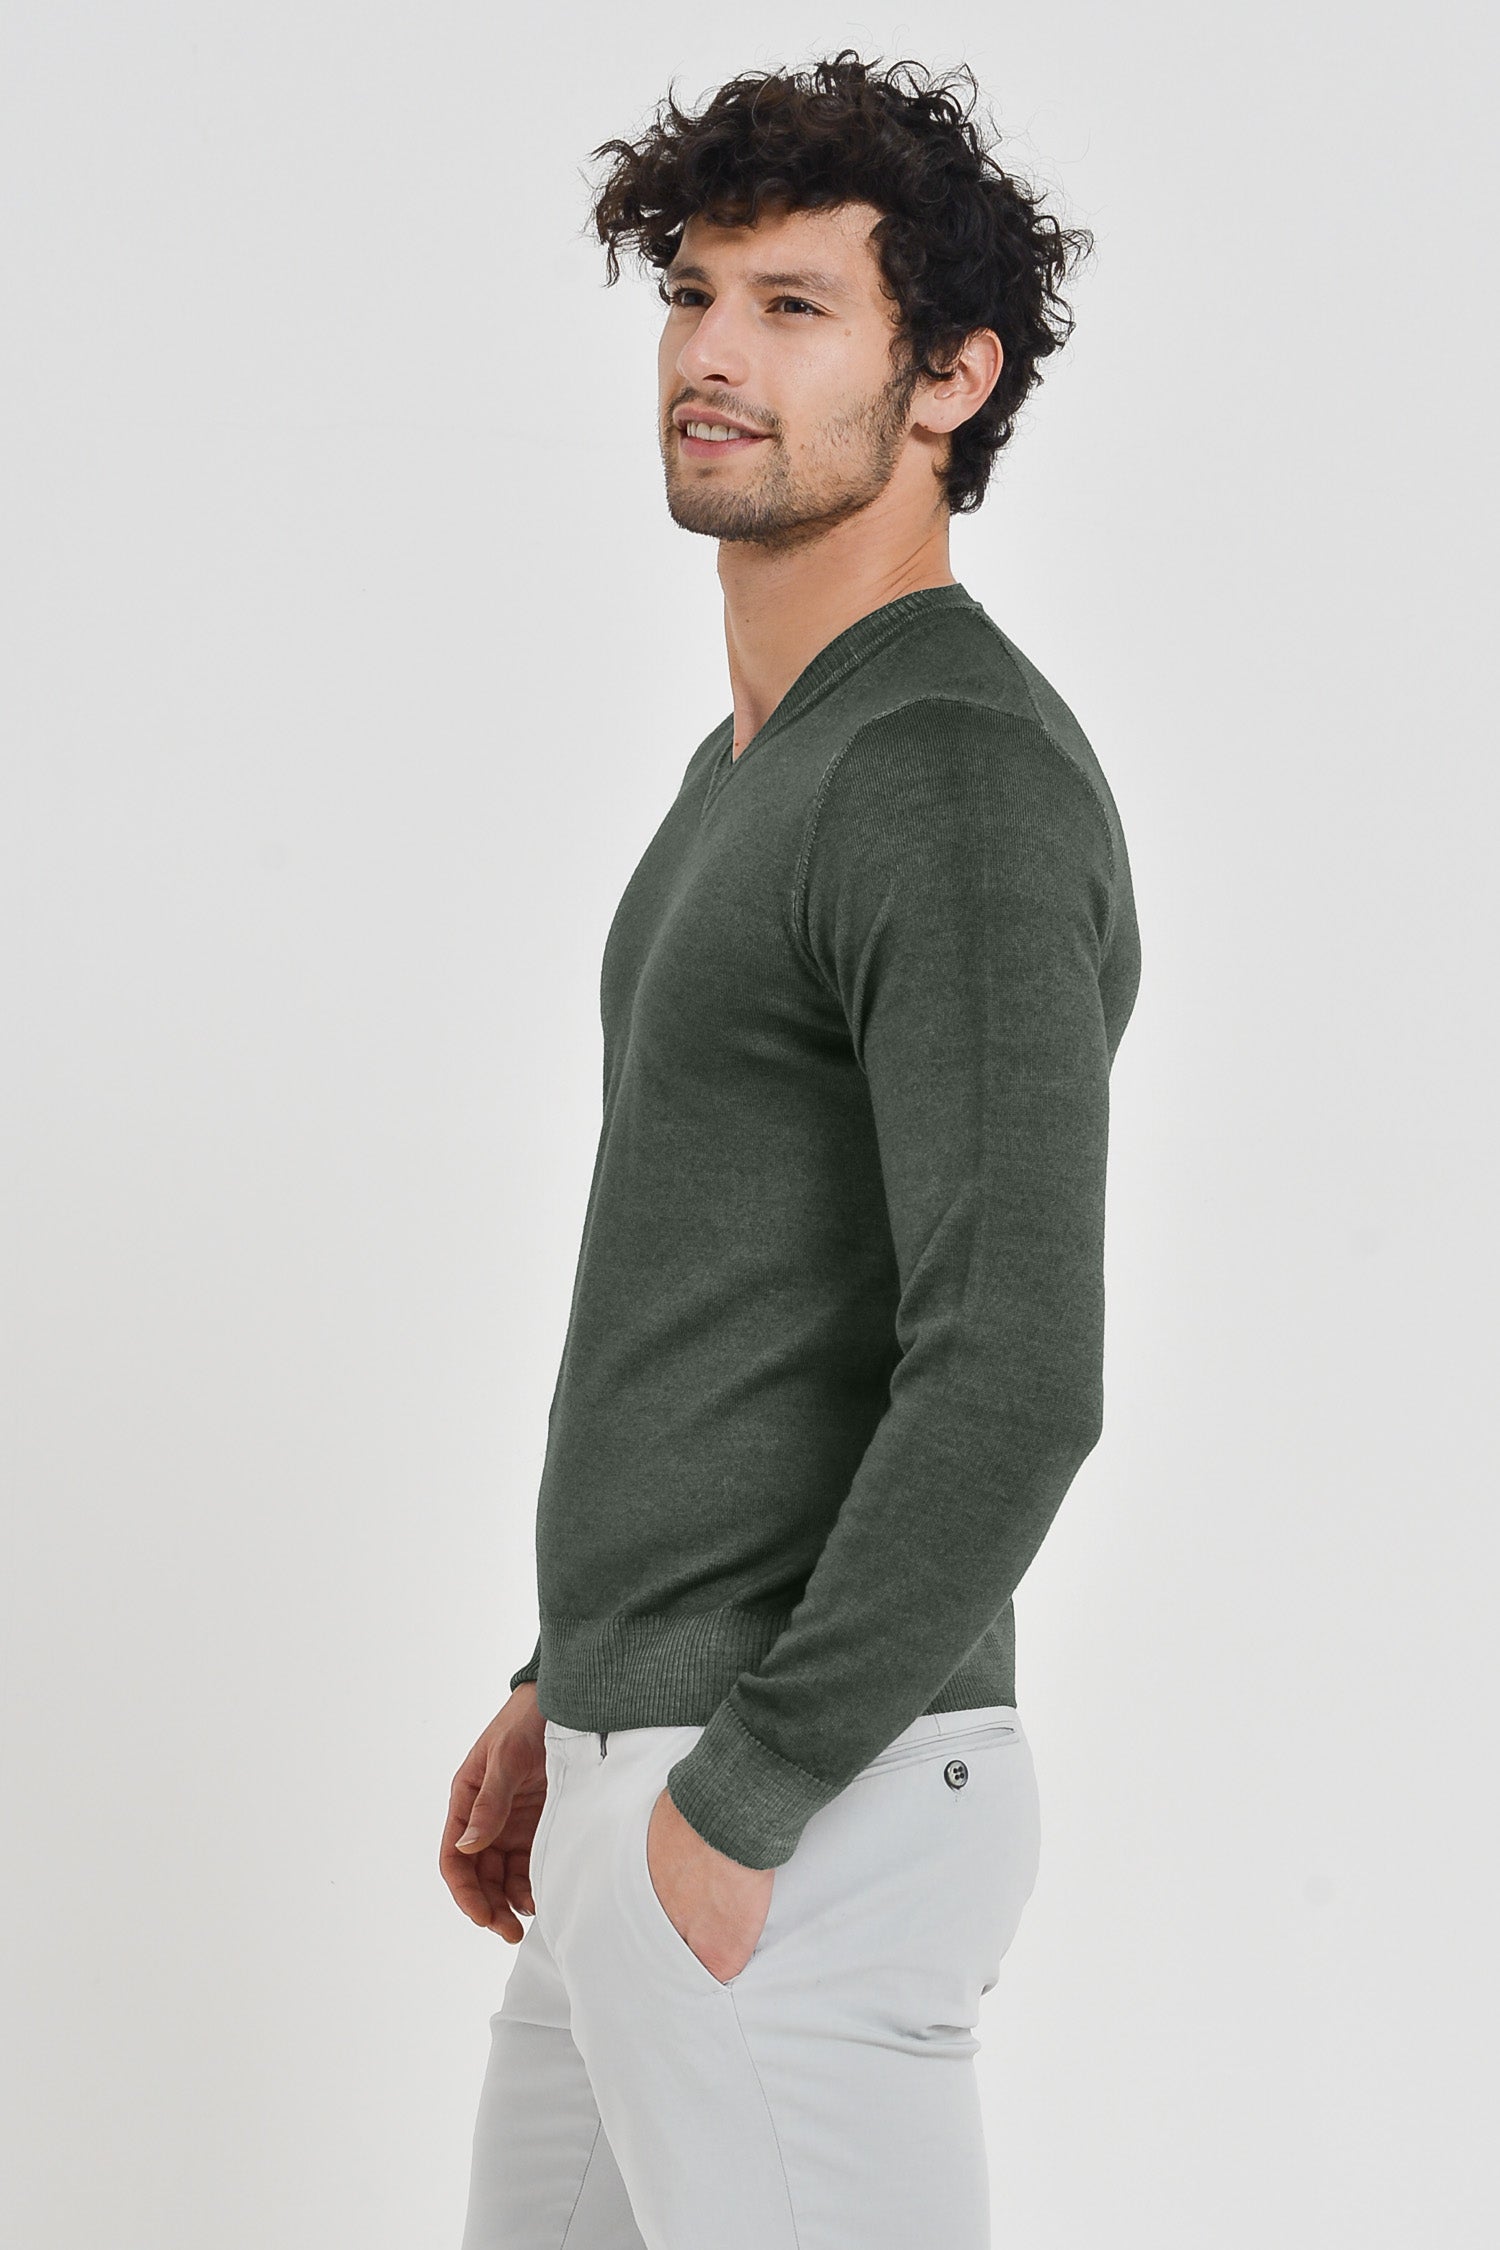 Wick - Extrafine Merino Wool V-Neck Sweater - Moss